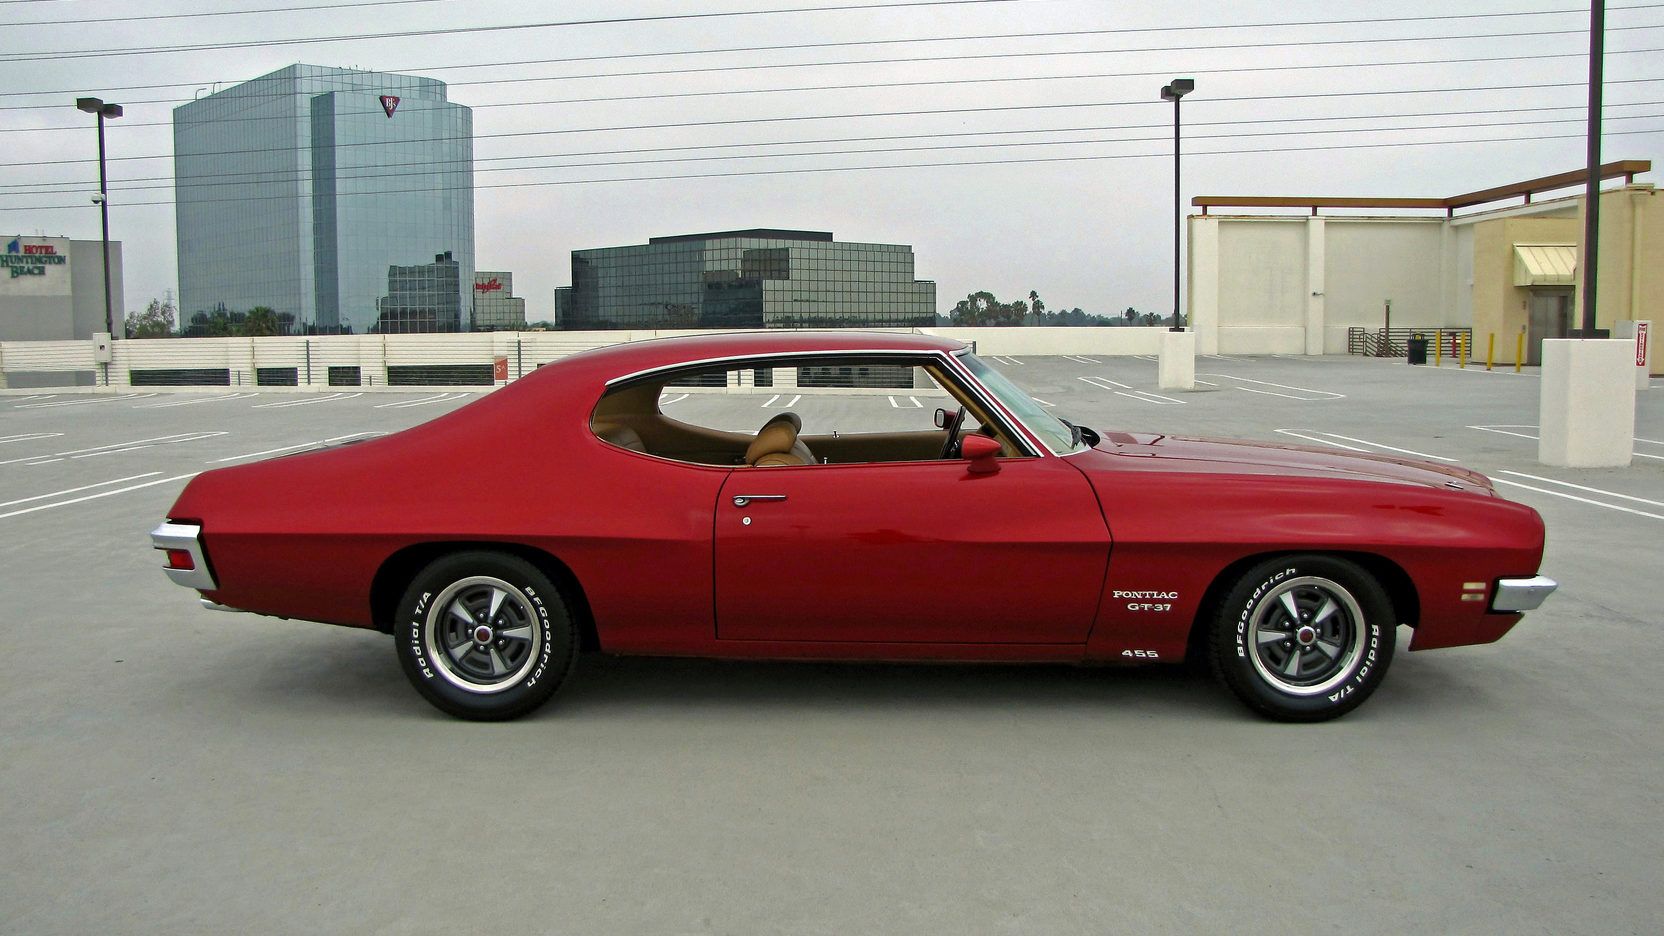 red Pontiac GT-37